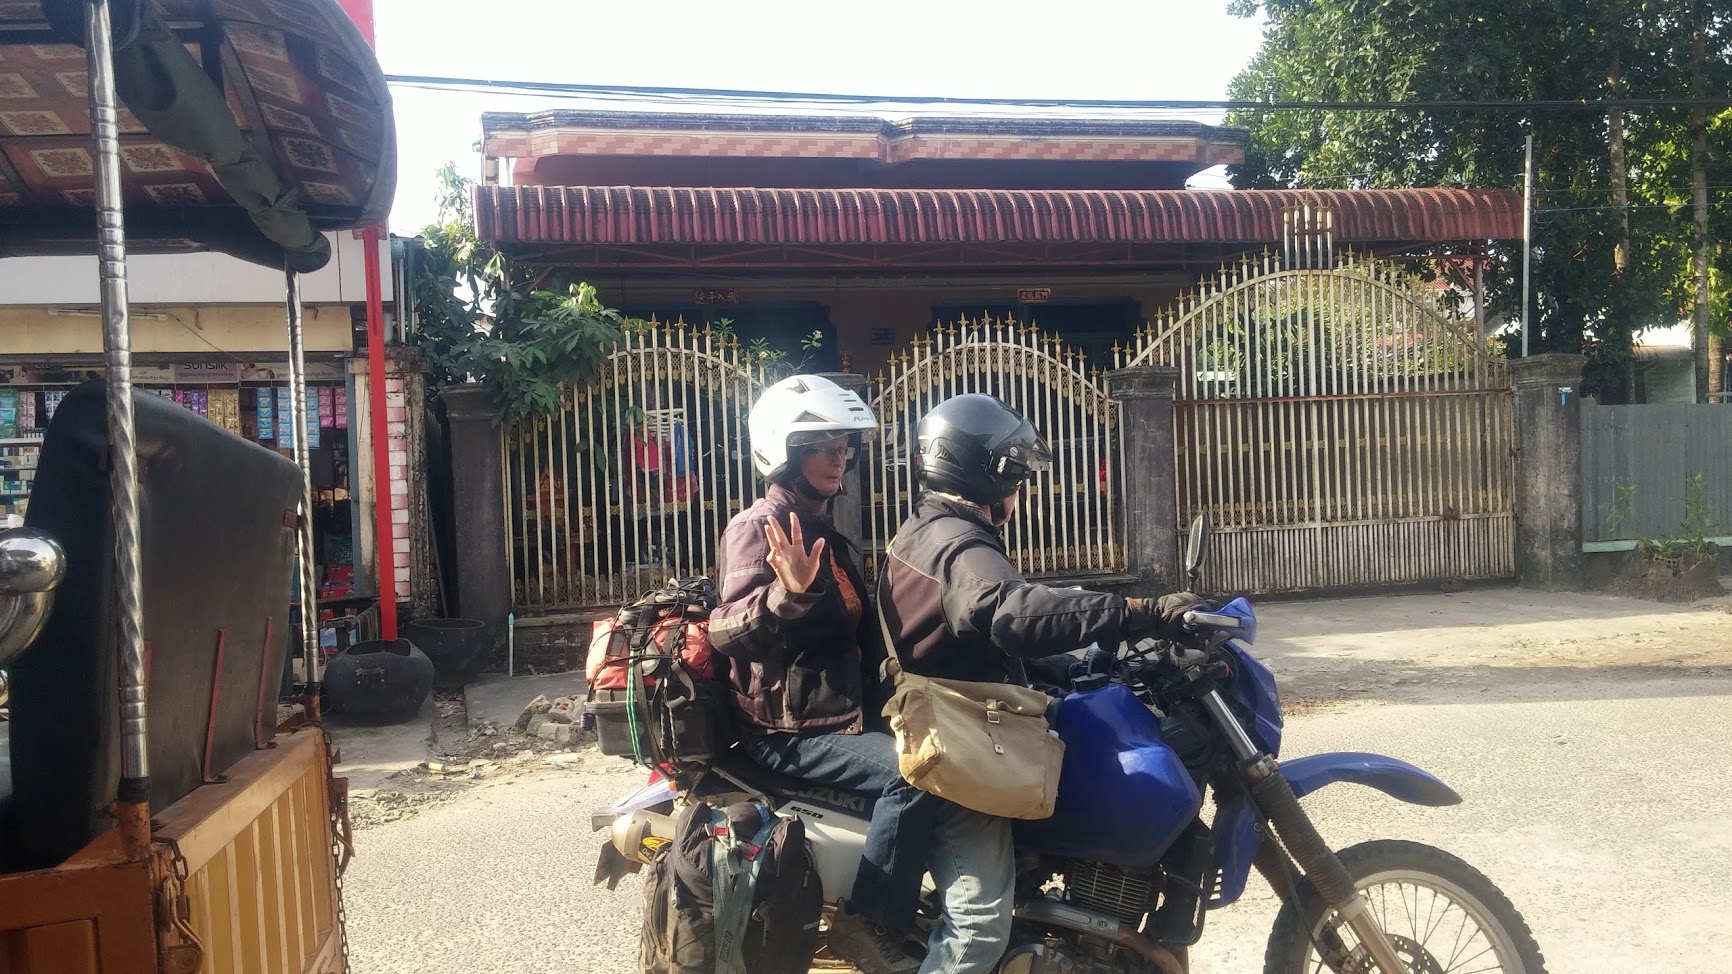 Adventure motorbikers, traveling and crossing borders